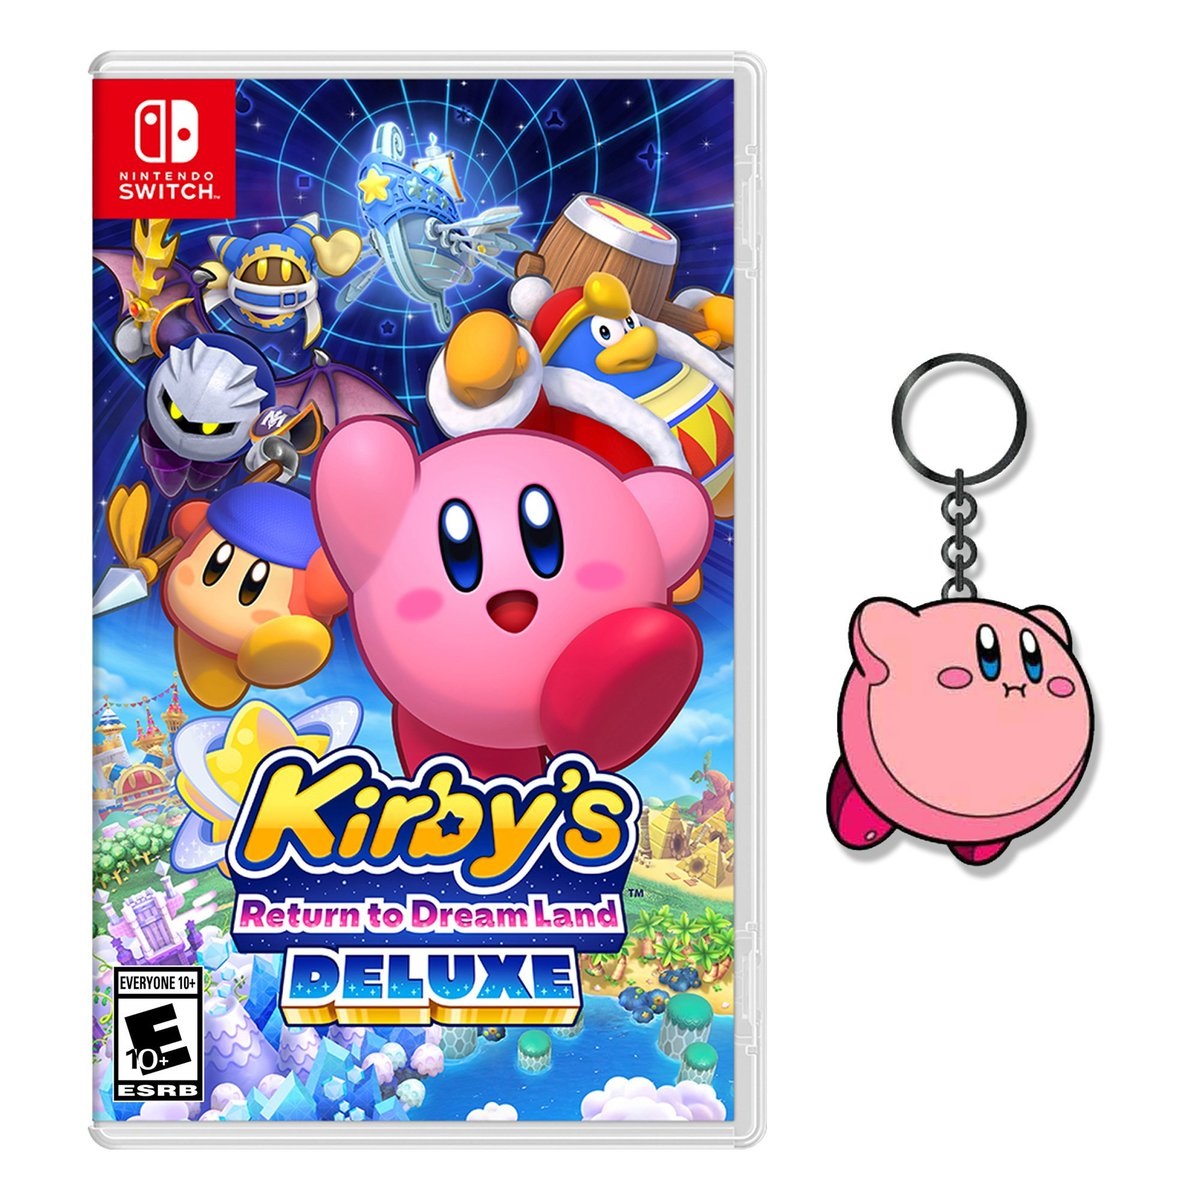 Kirby's Return to Dream Land Deluxe pre-order bonus Walmart